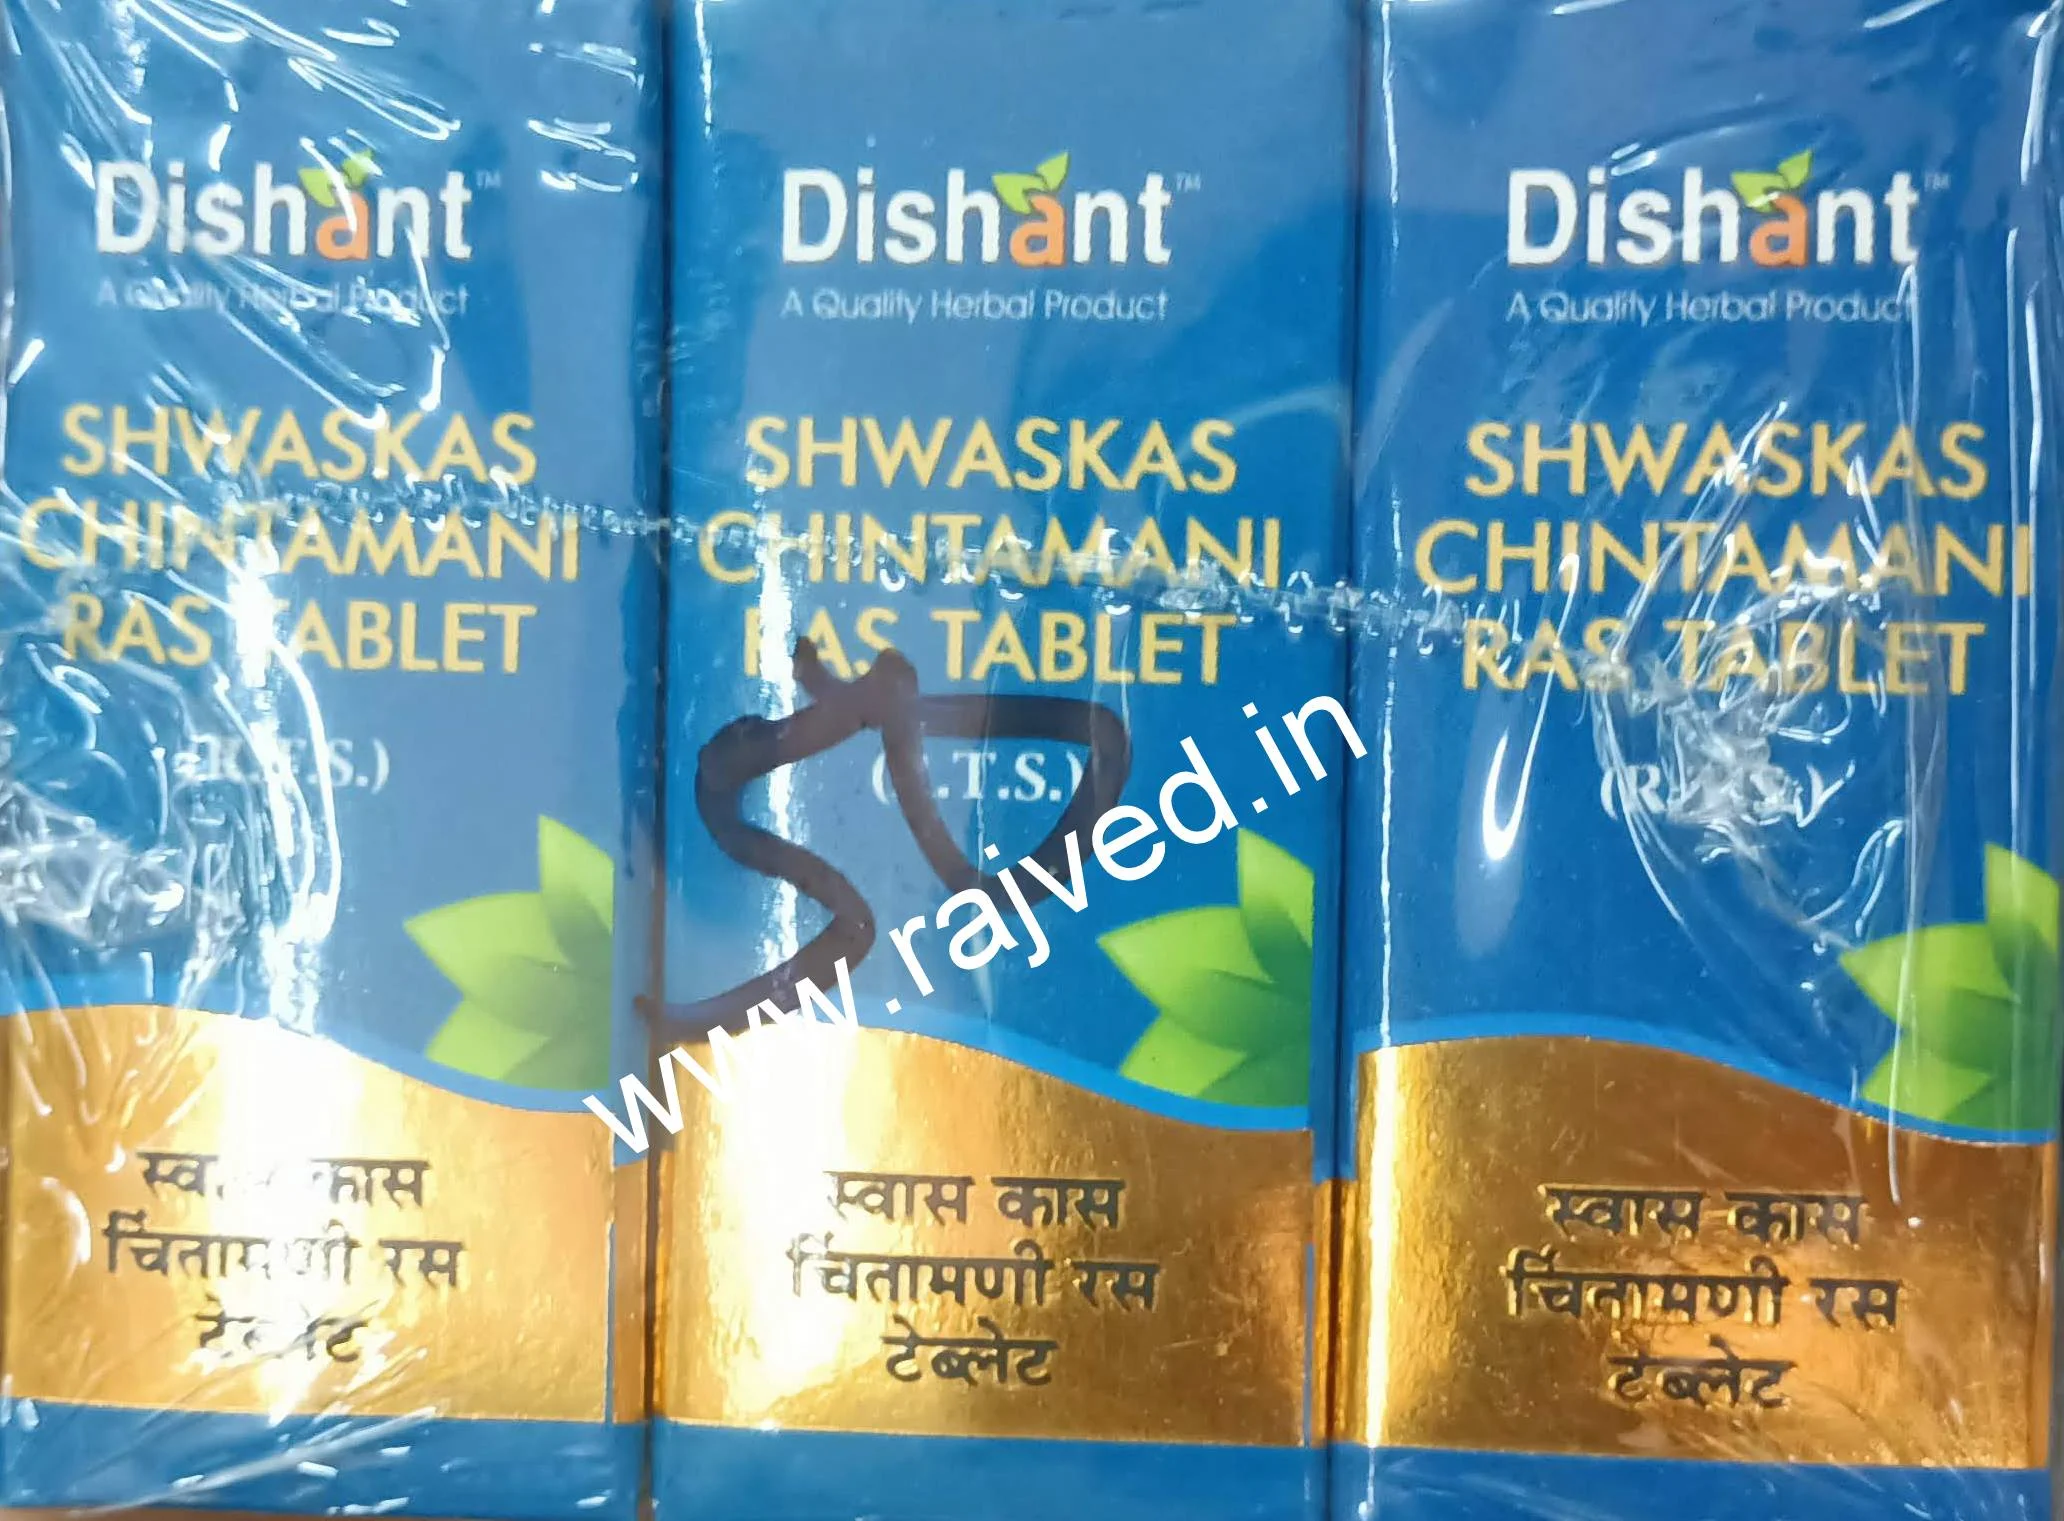 Swaskas Chintamani ras tablets gold 50tab upto 20% off dishant ayurvedic suppliers